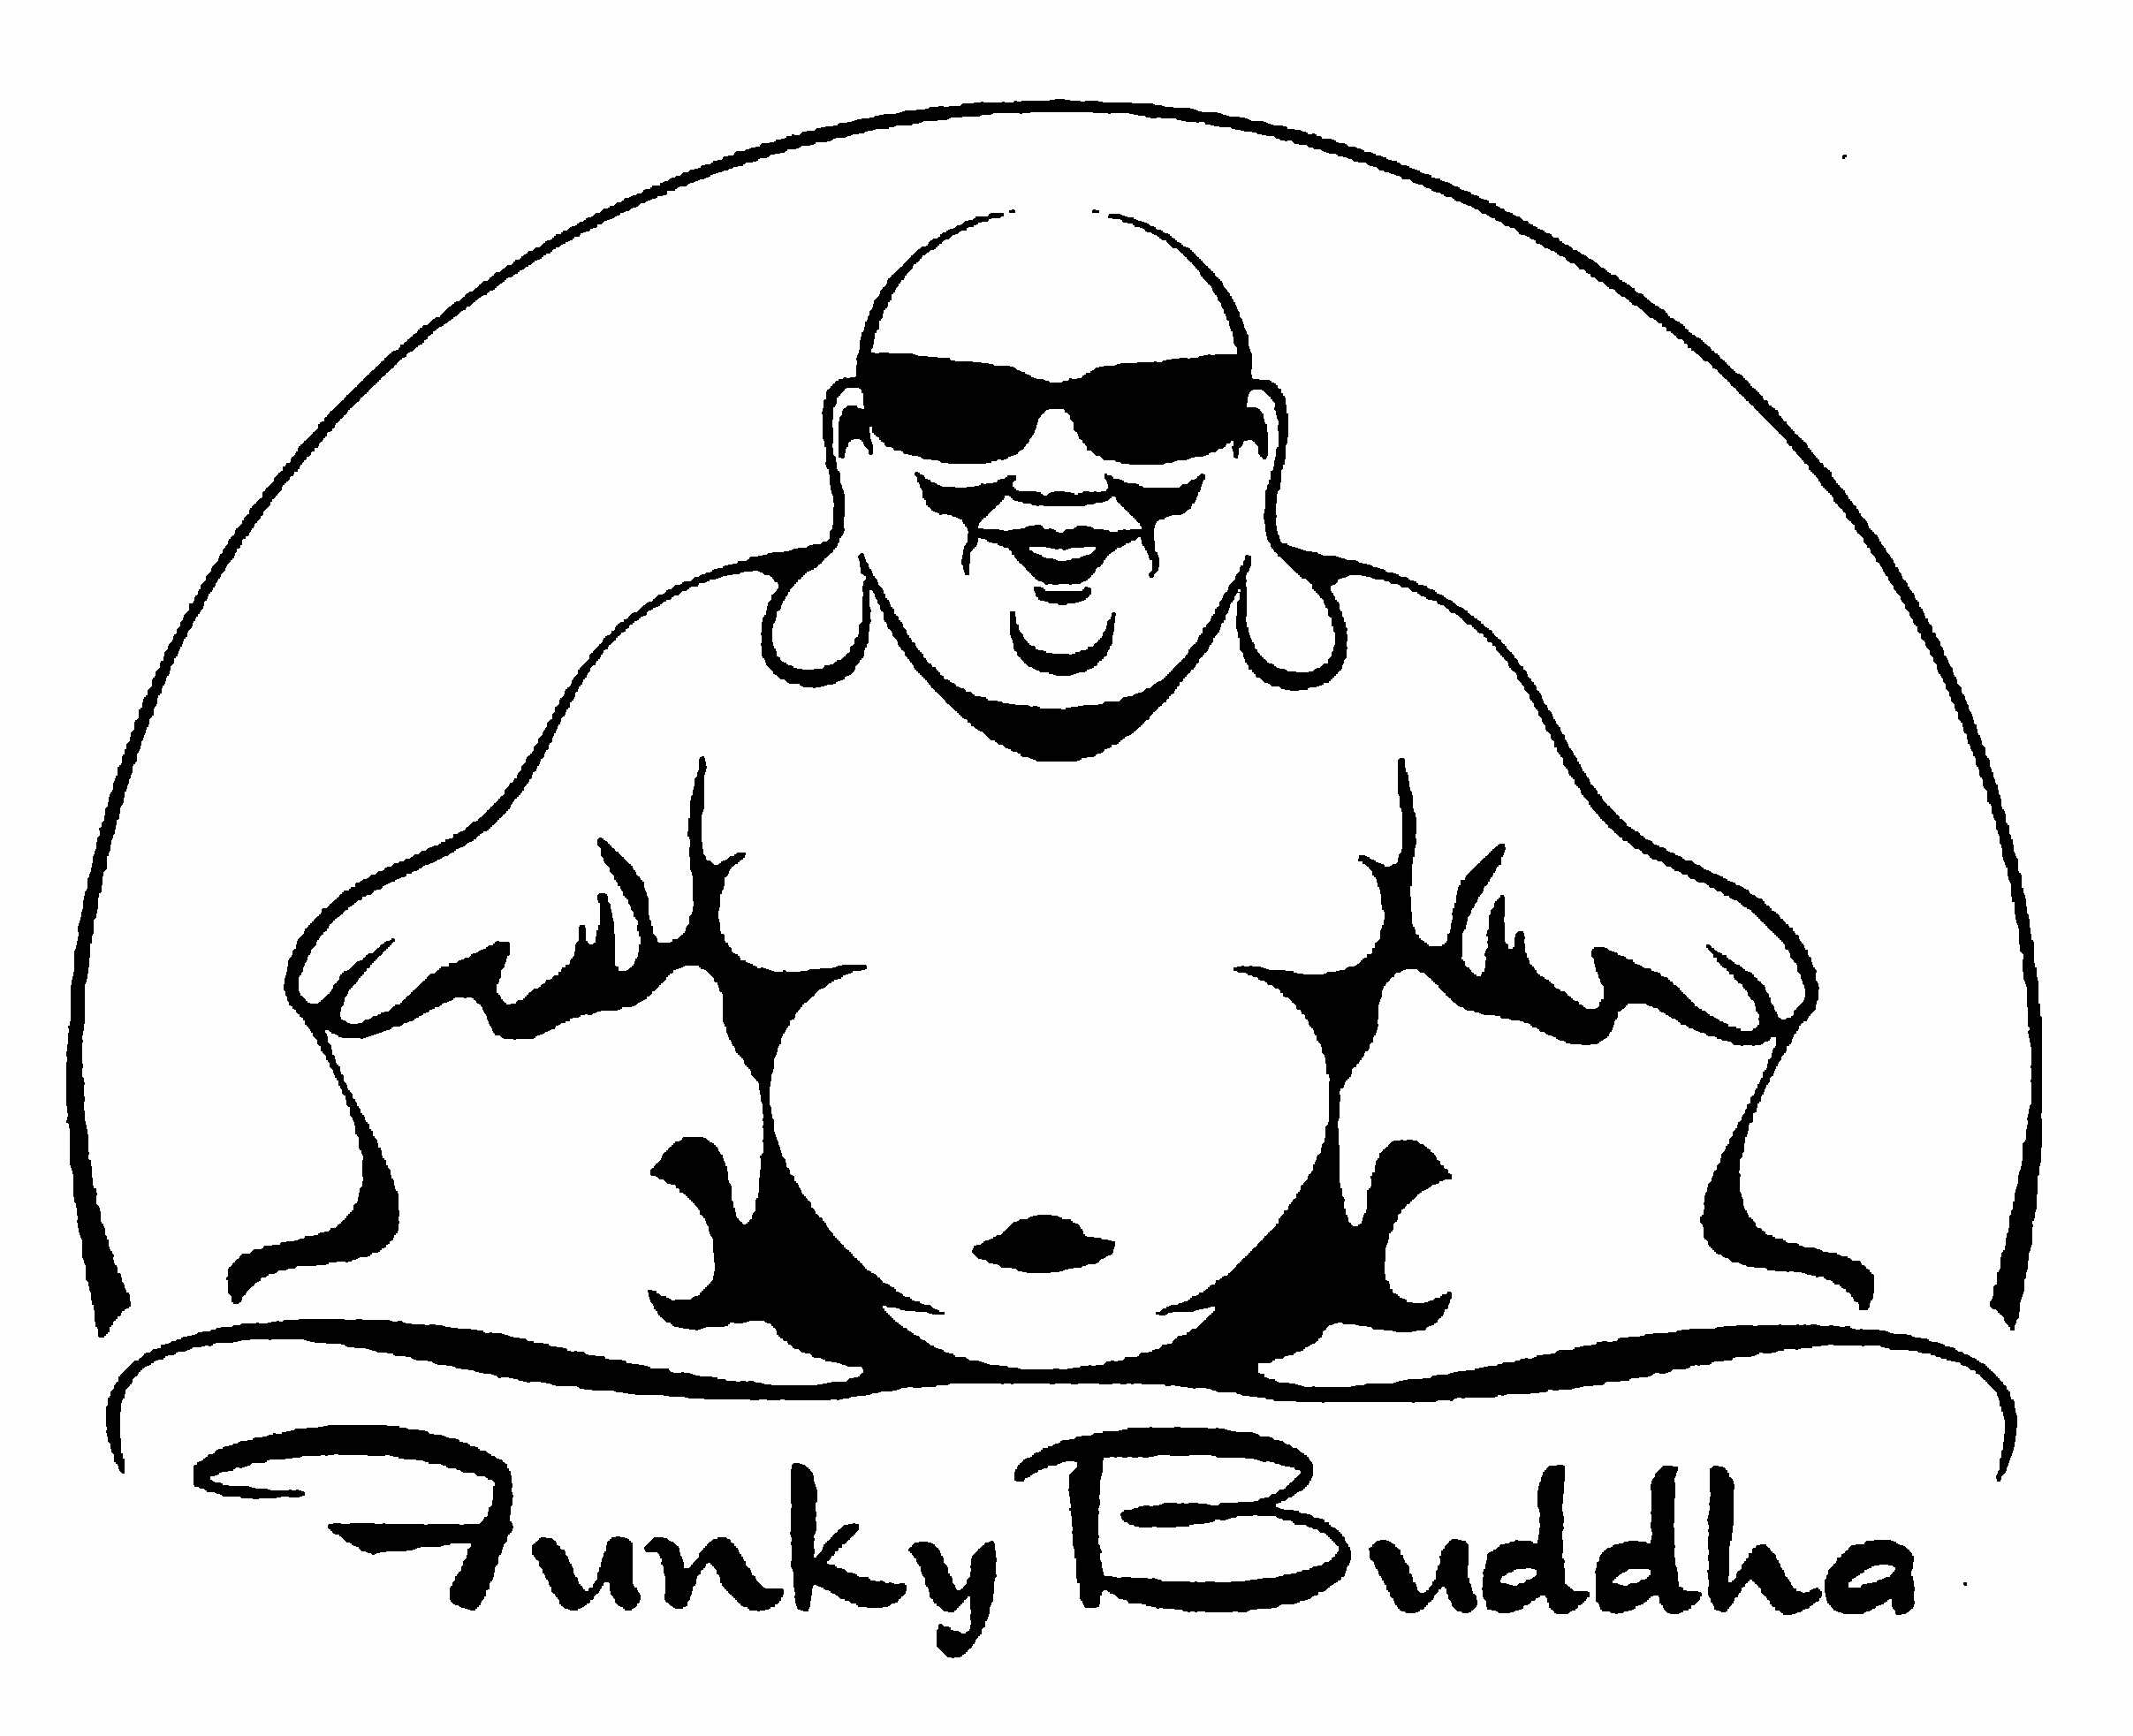 Trademark Logo FUNKY BUDDHA